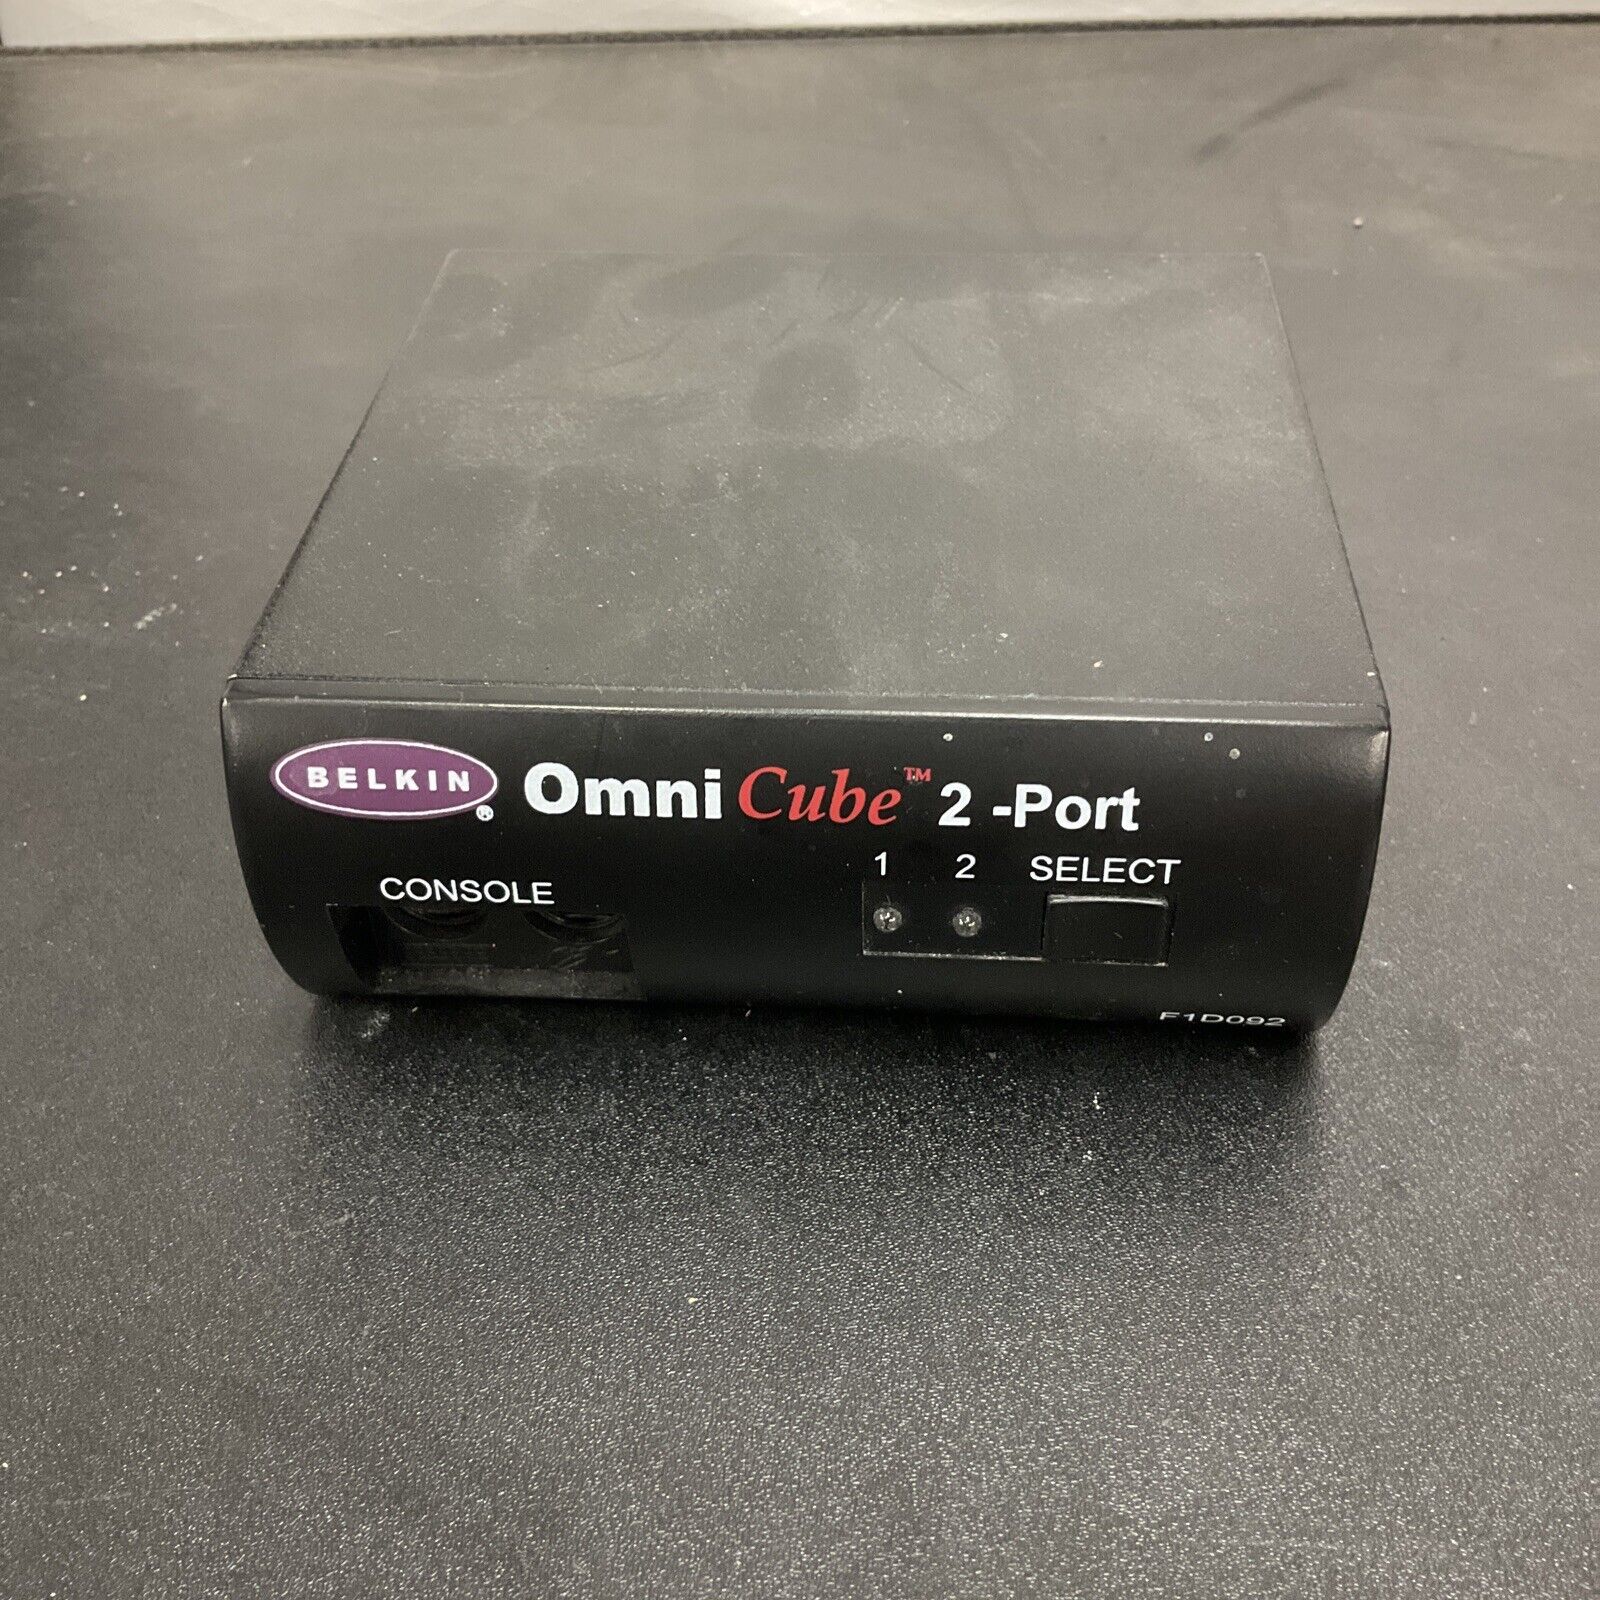 Belkin Omni Cube 2-Port F1D092- NO POWER CORD